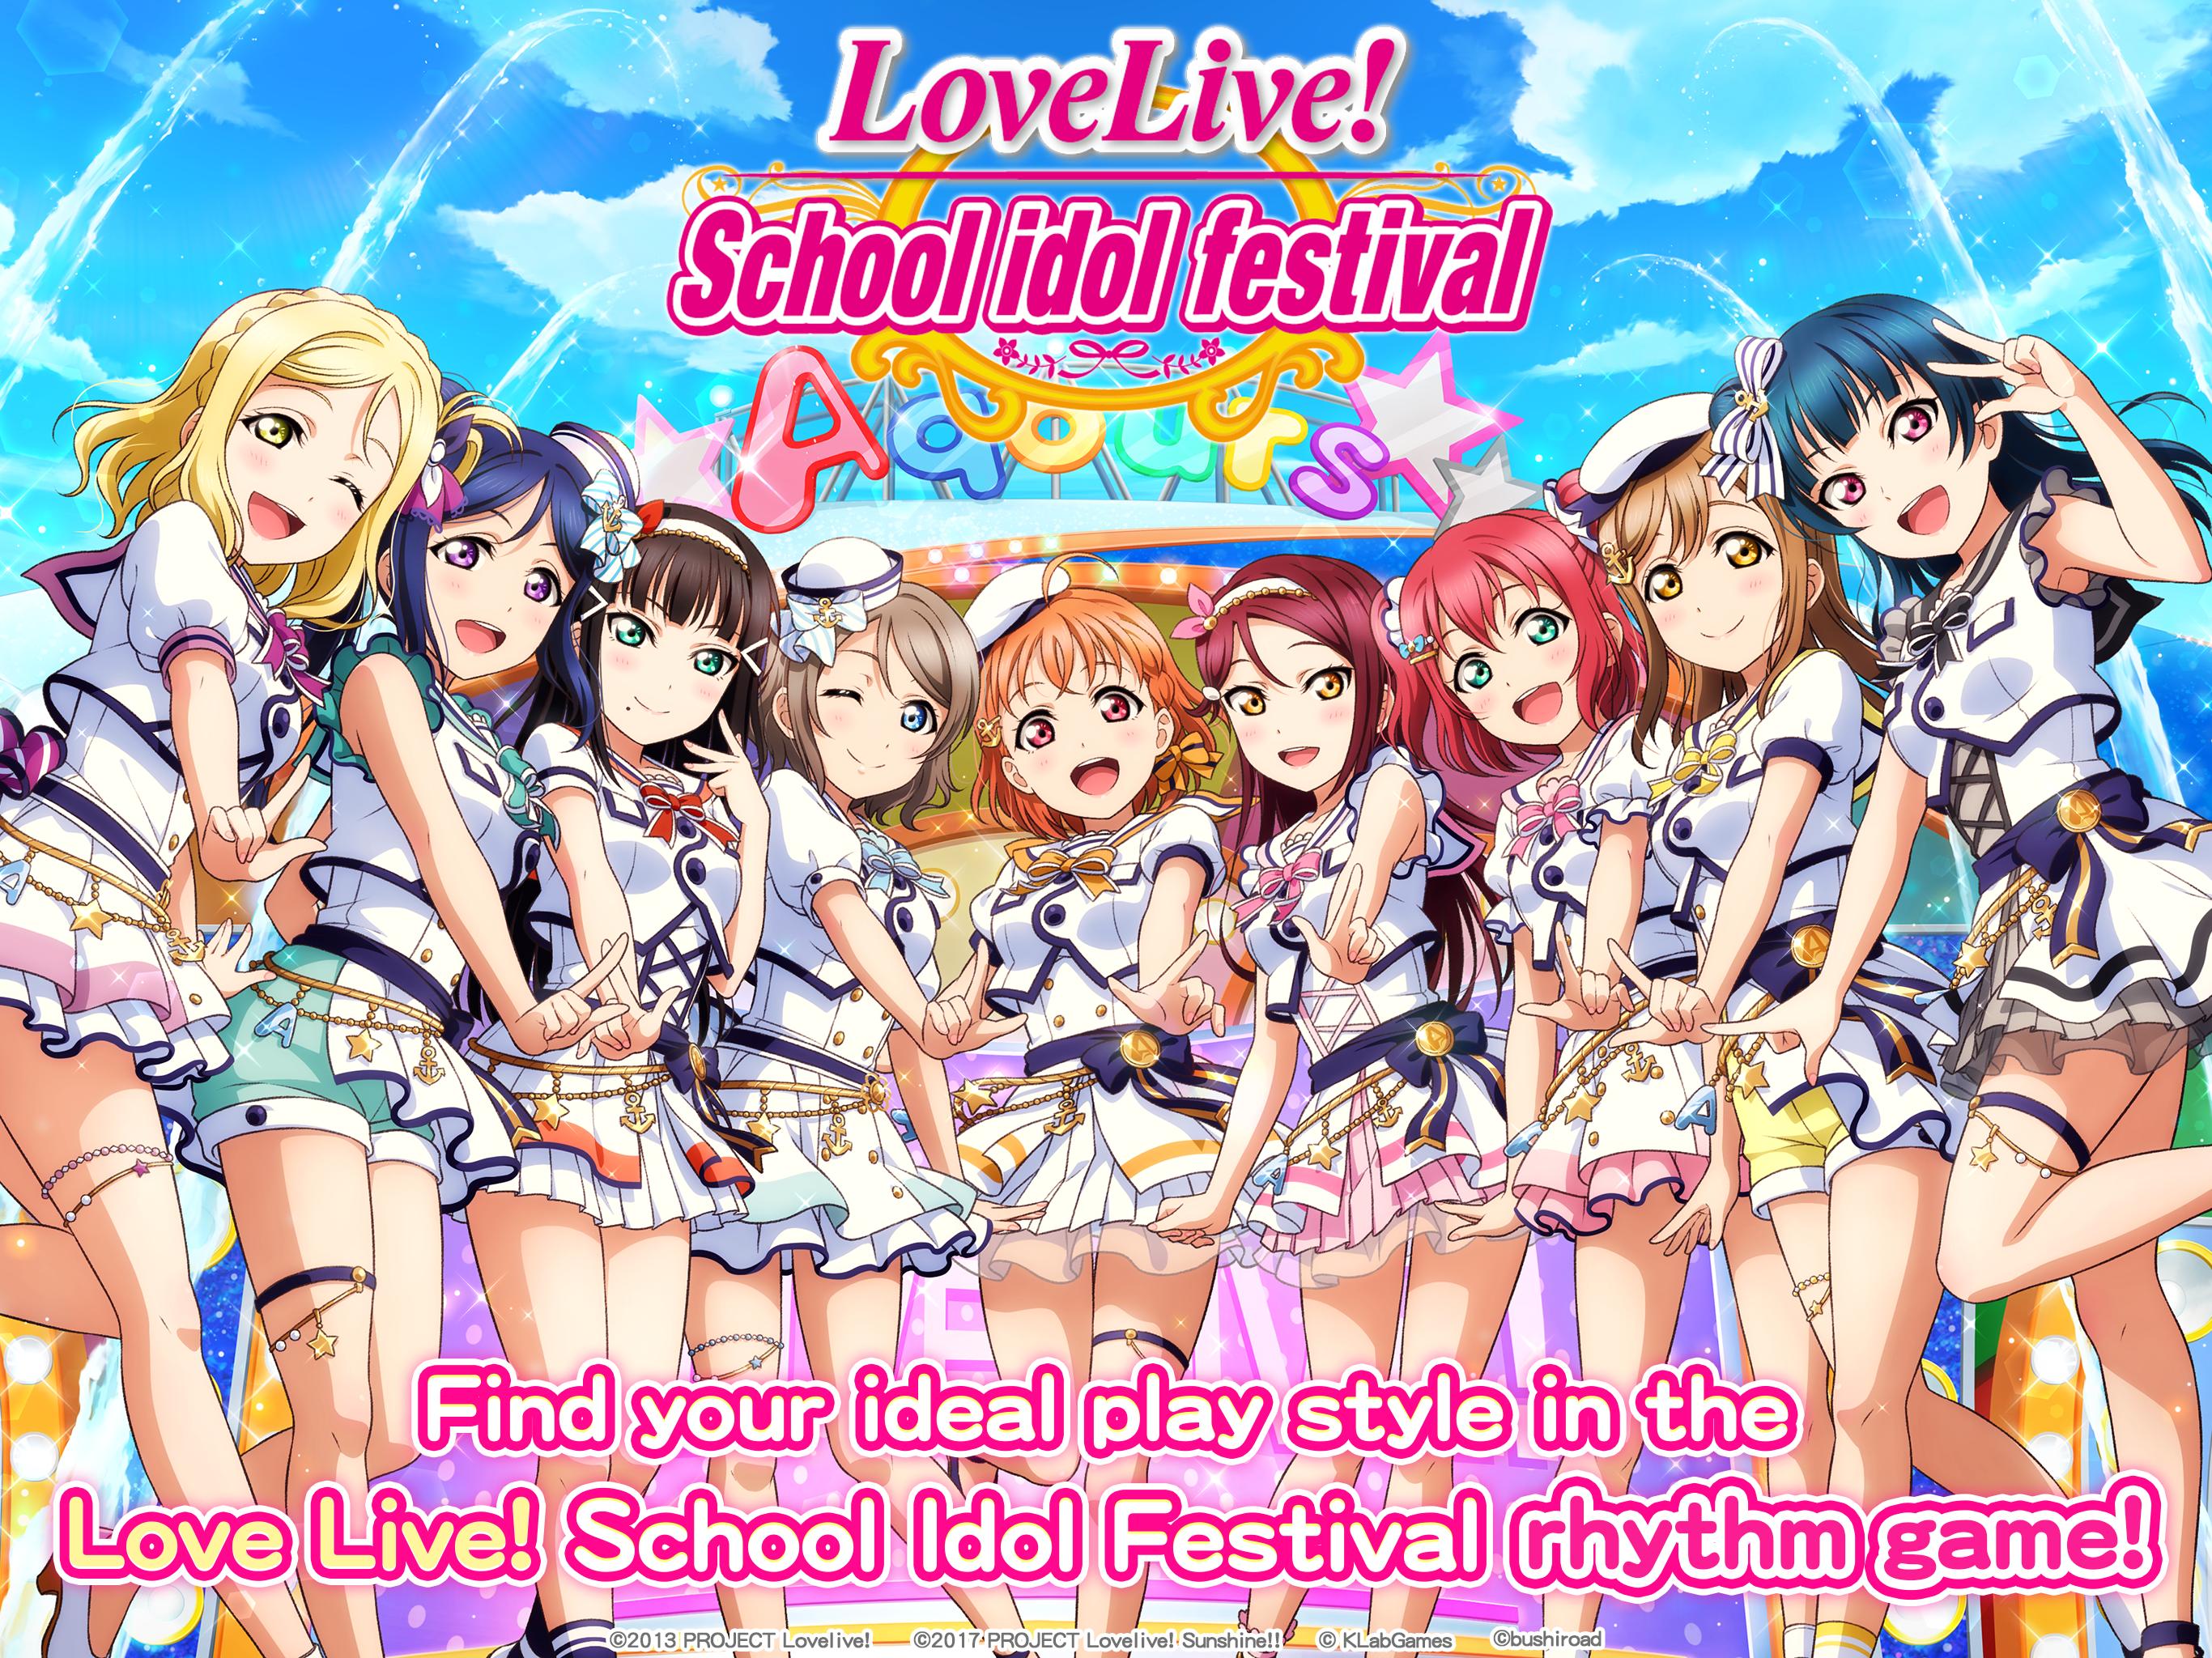 Love Live! School idol festival- Music Rhythm Game 6.9.2 Screenshot 15